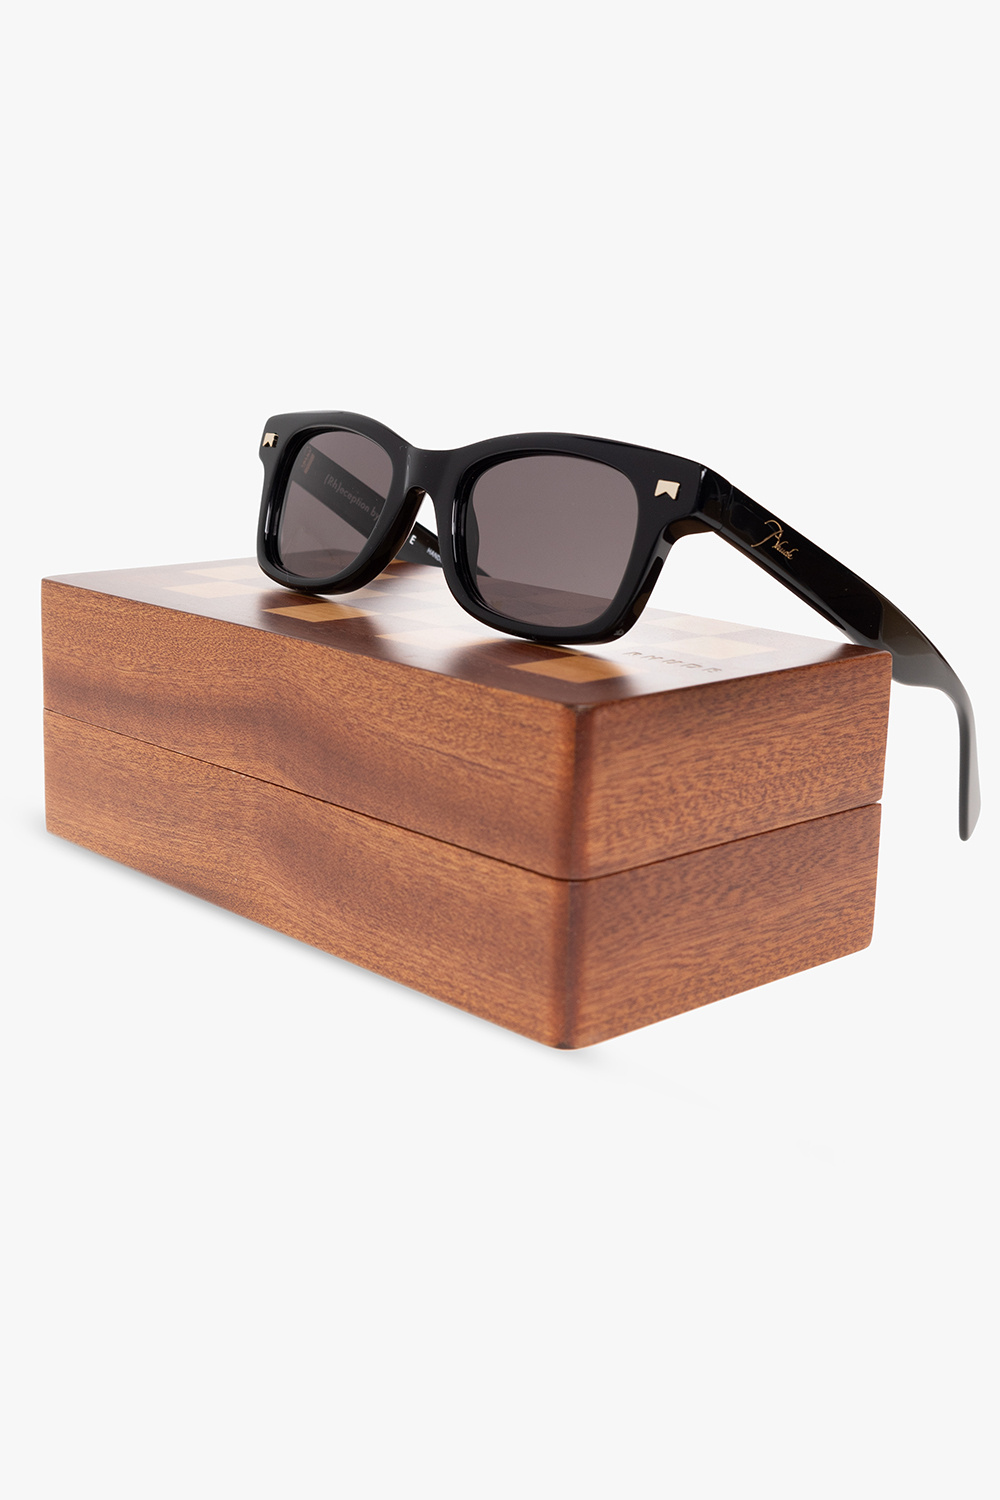 Rhude ‘Sun Rhay’ sunglasses